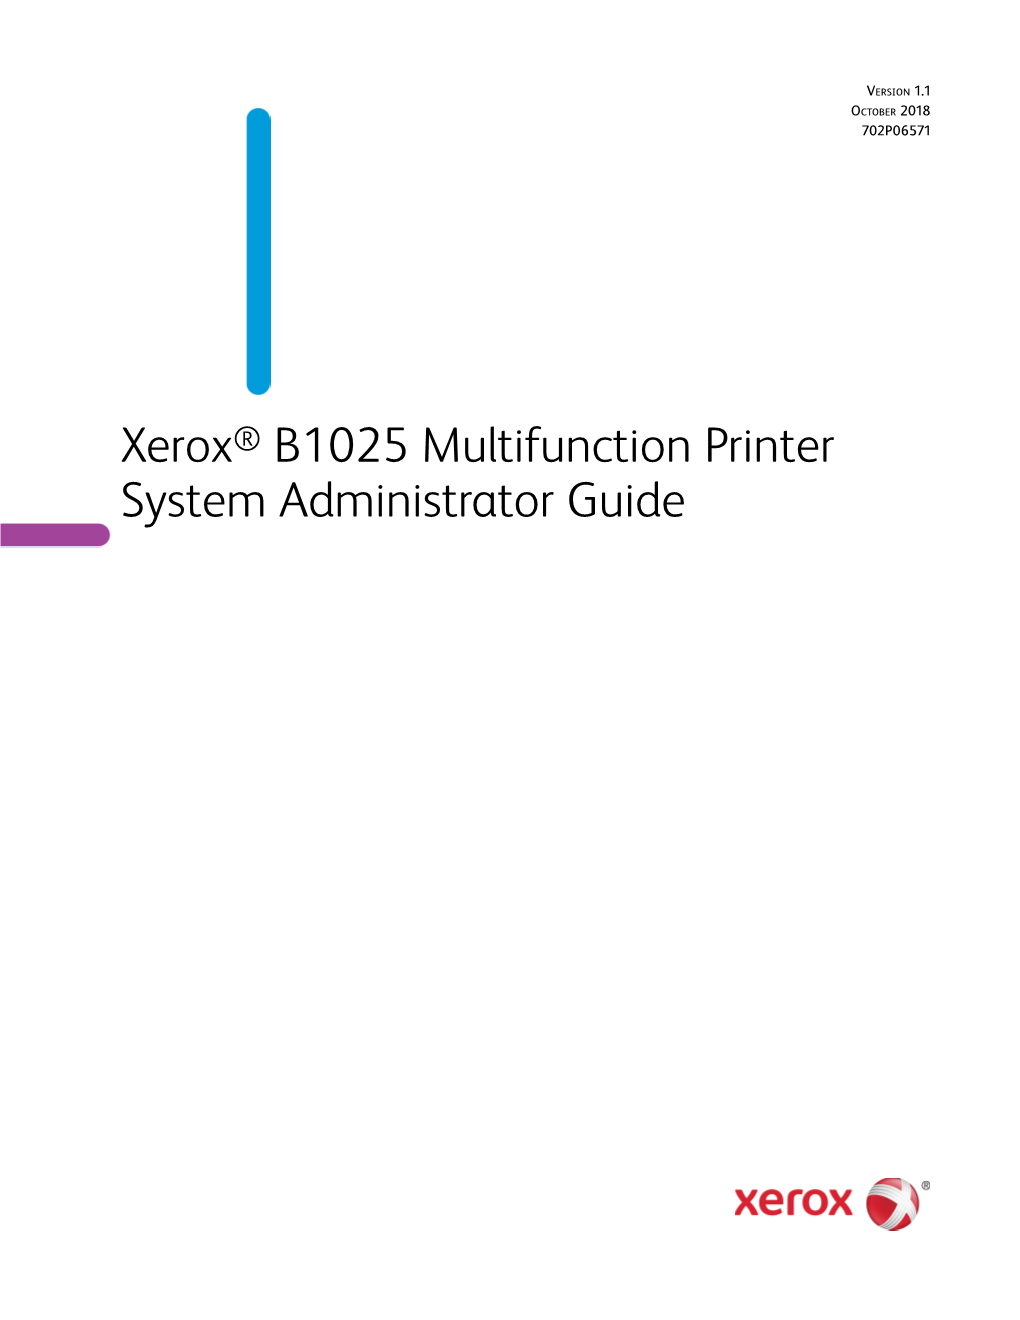 Xerox® B1025 Multifunction Printer System Administrator Guide © 2018 Xerox Corporation